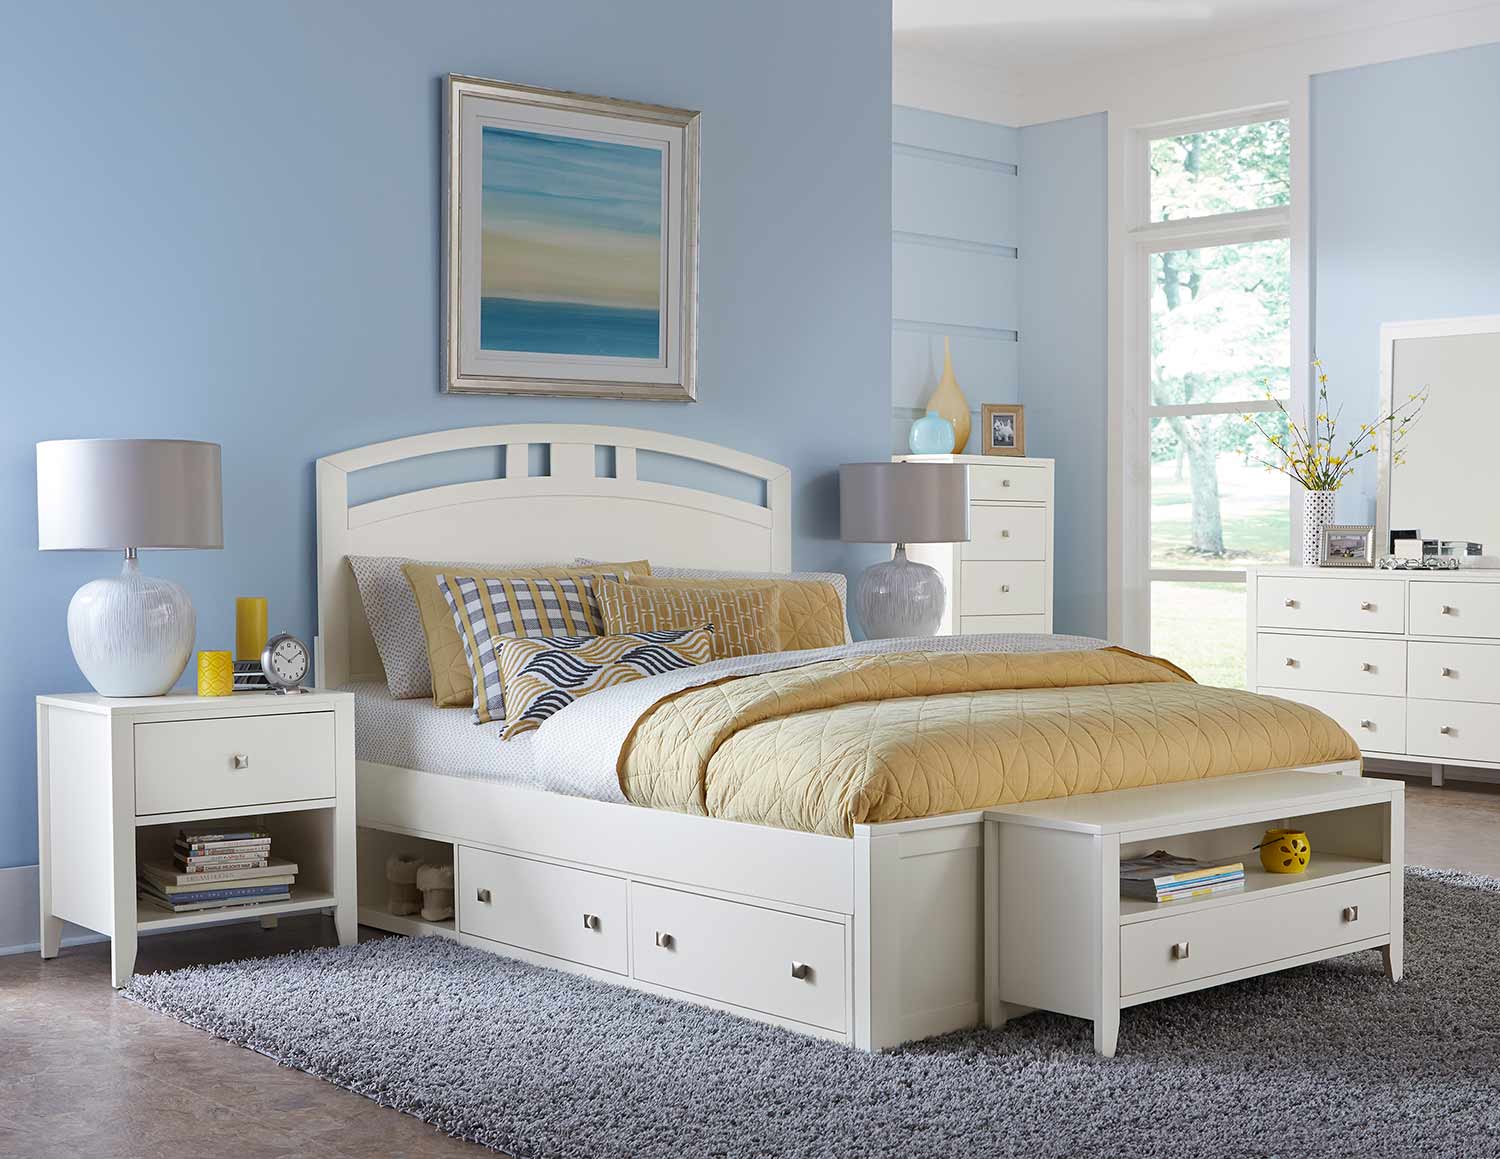 NE Kids Pulse Arch Bedroom Set With Storage - White